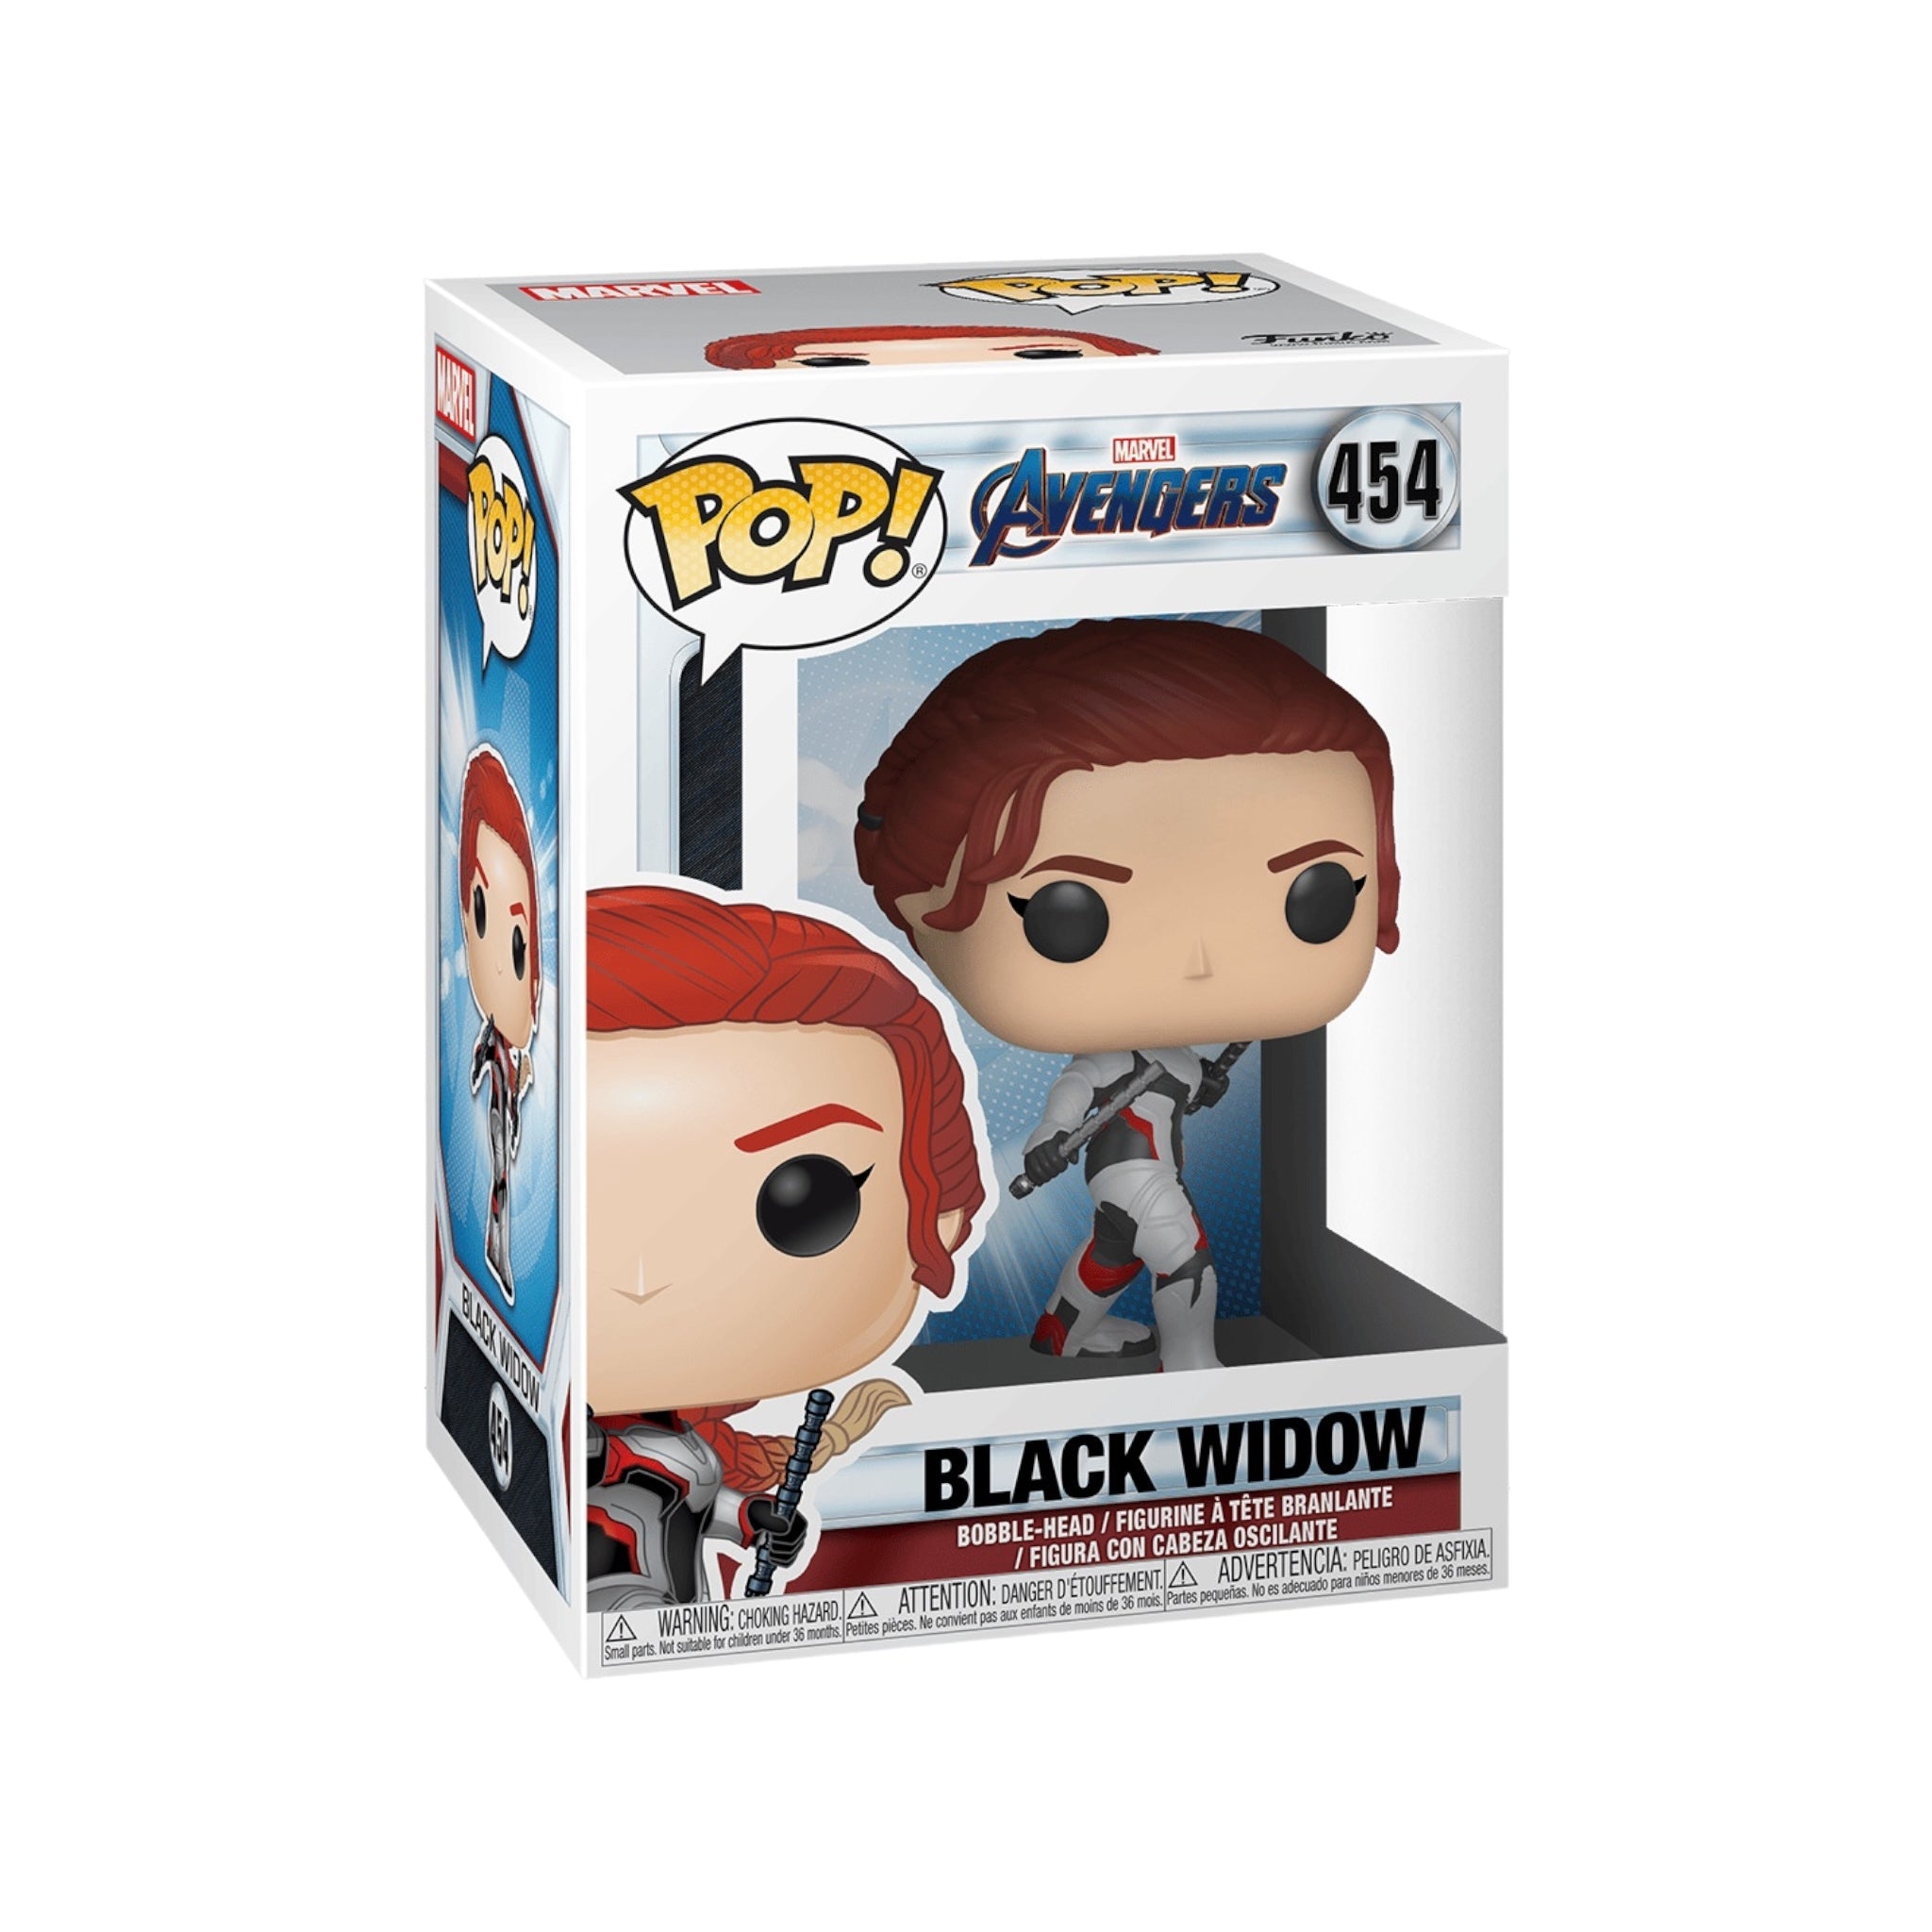 Black Widow #454 (Team Suit) Funko Pop! - Avengers Endgame